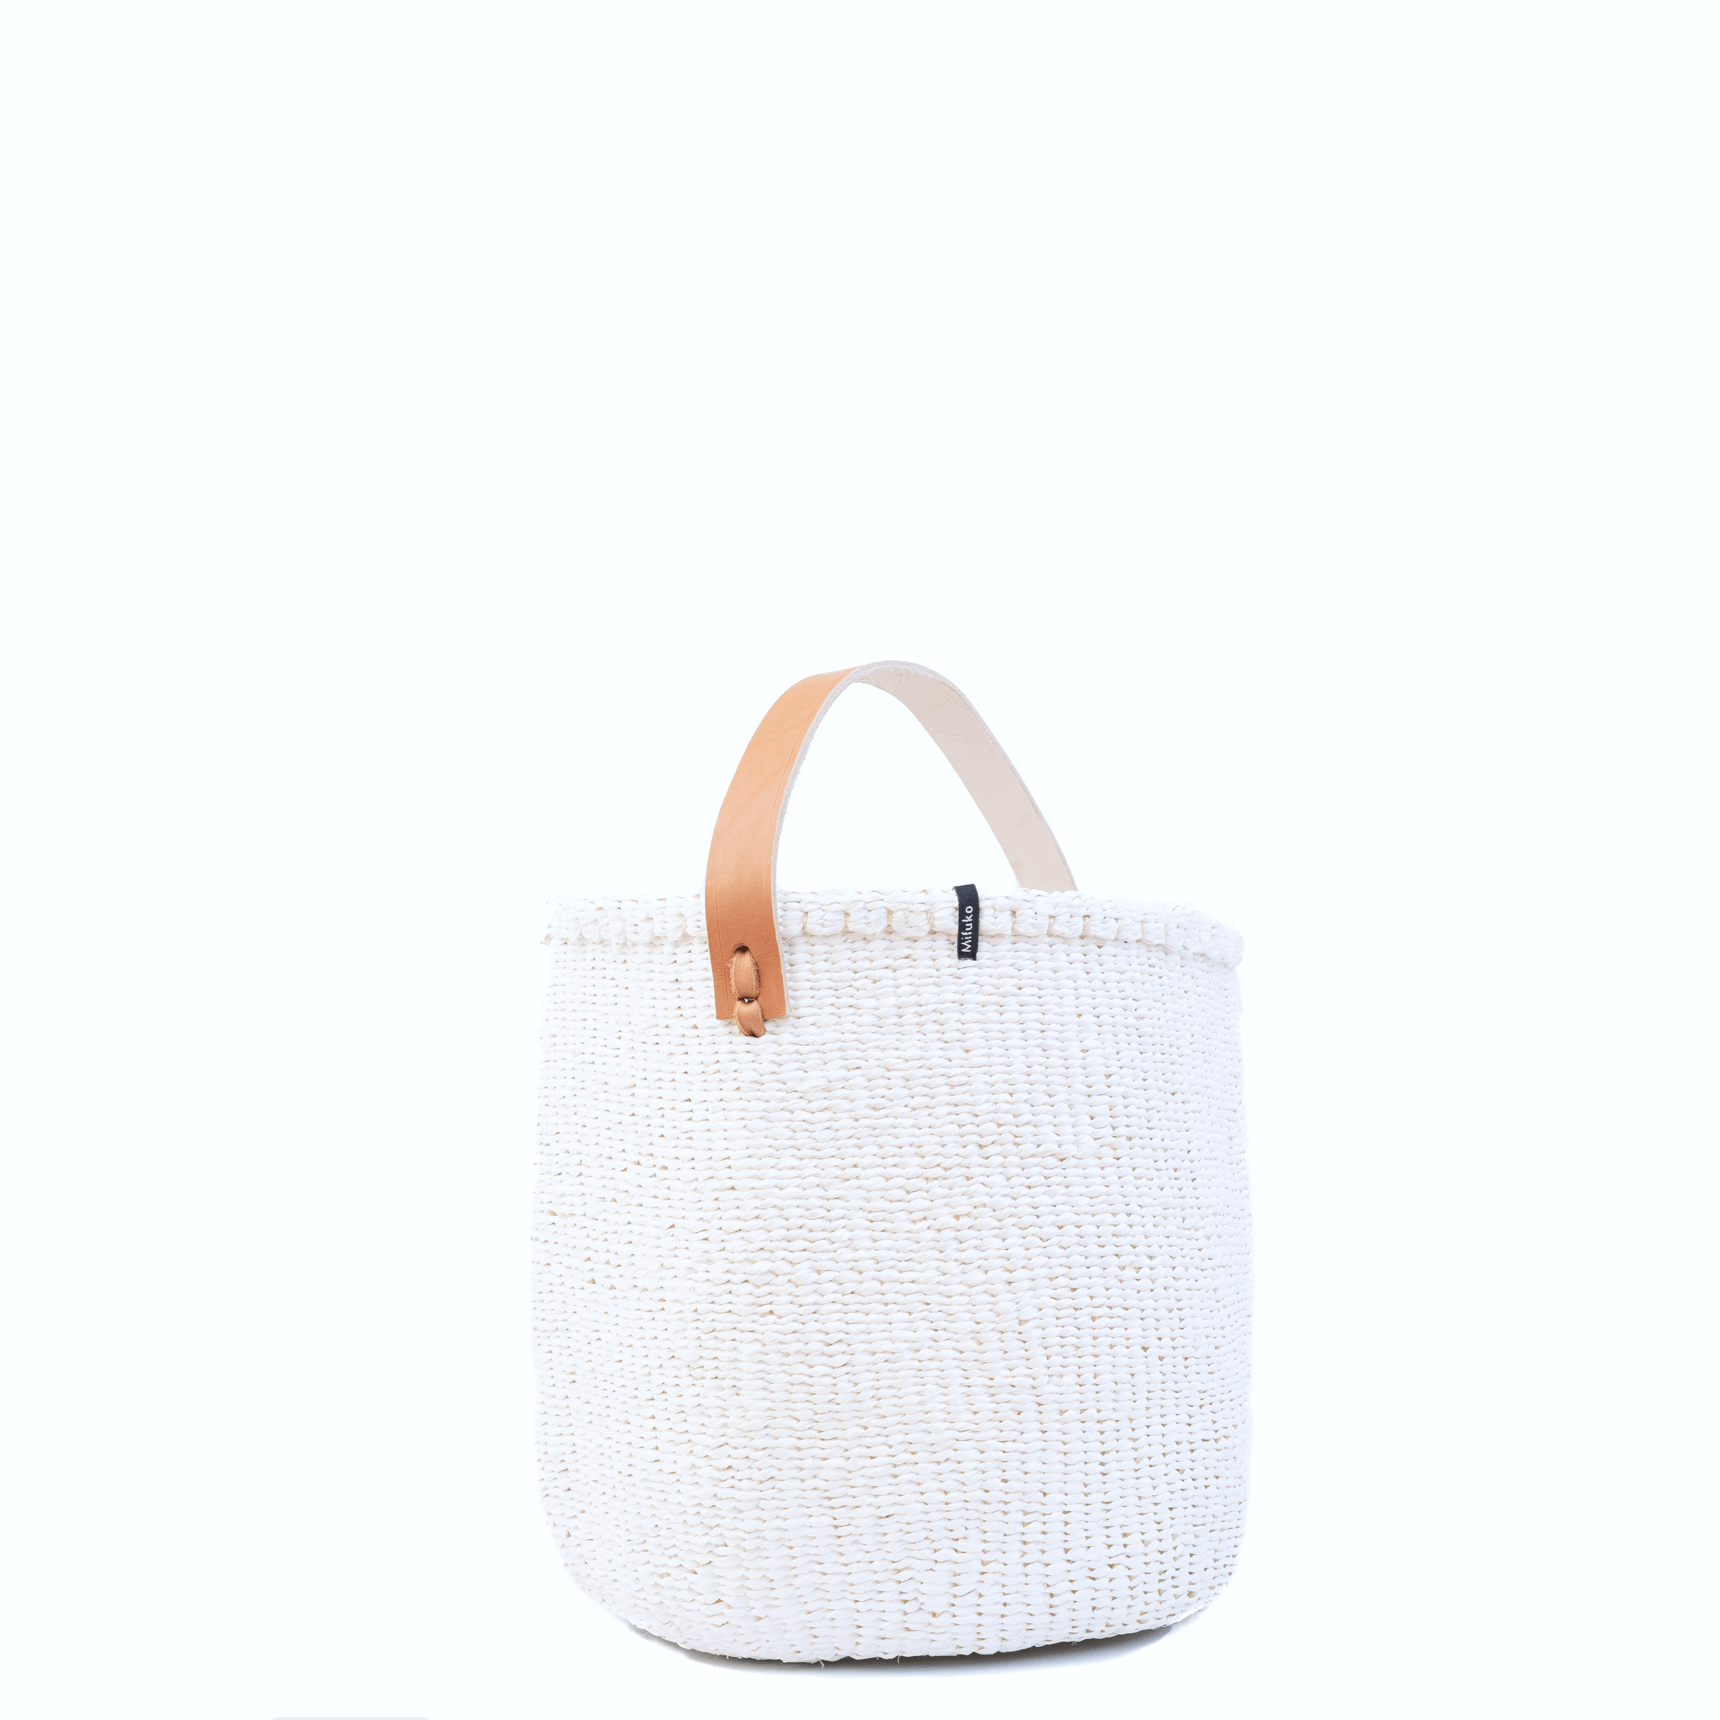 Kiondo basket | White with handle S